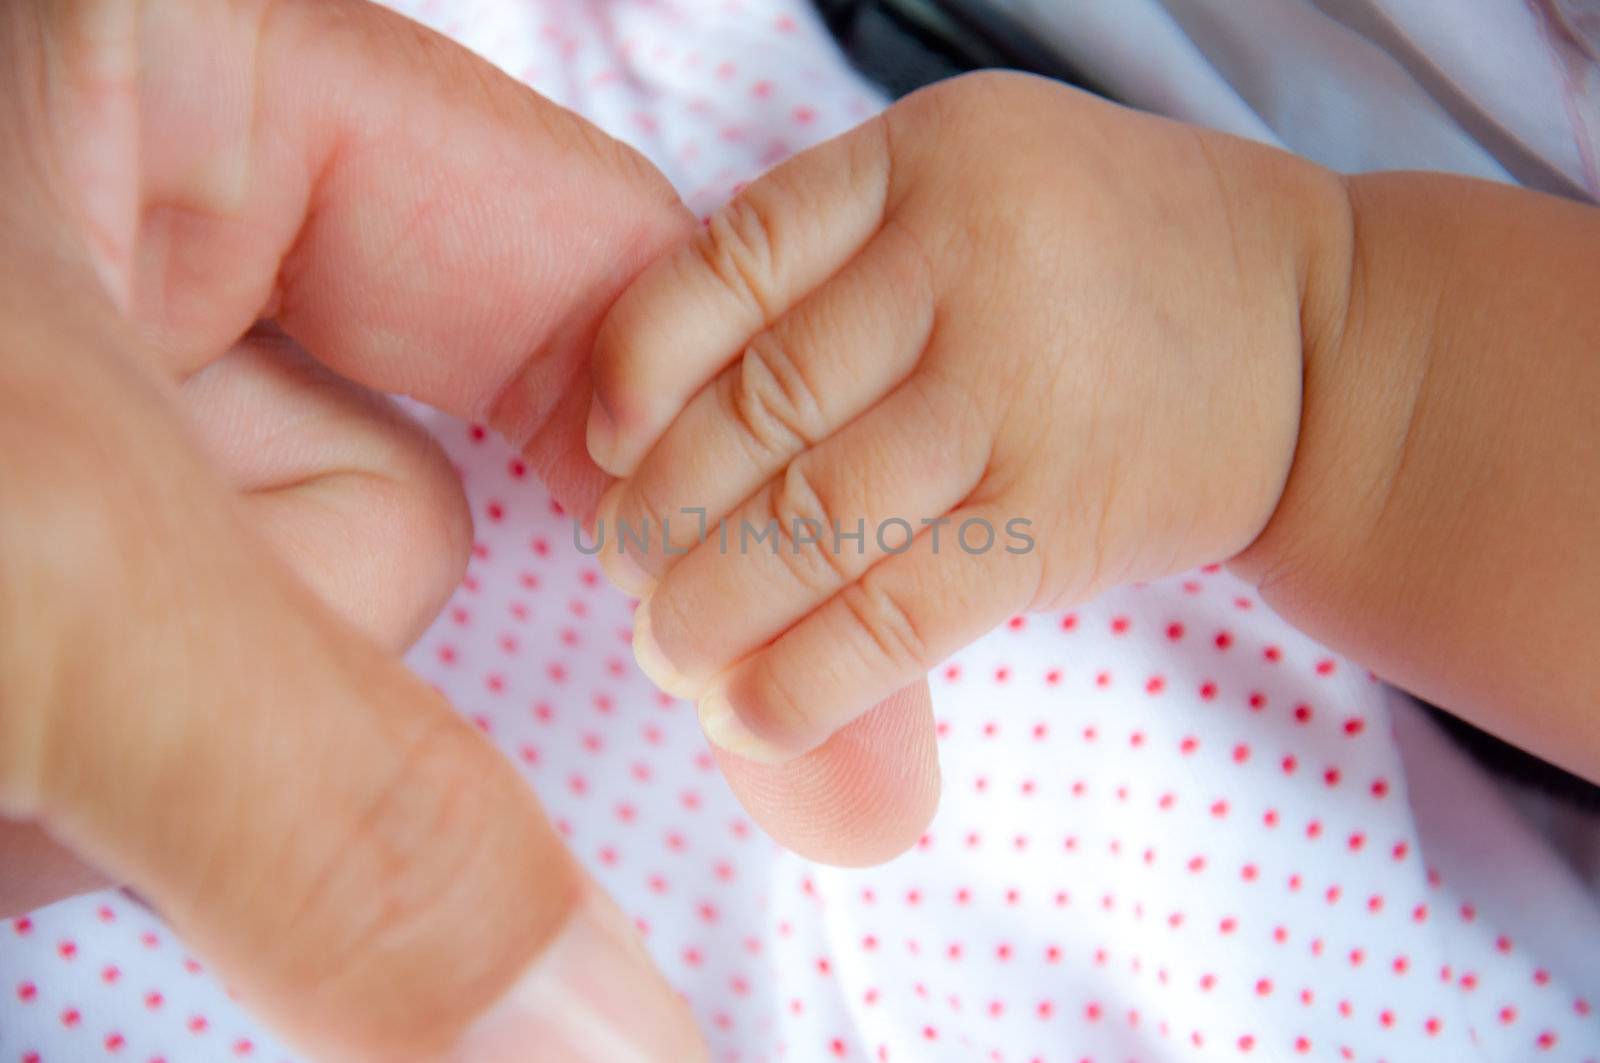 Baby hand by buffaloboy